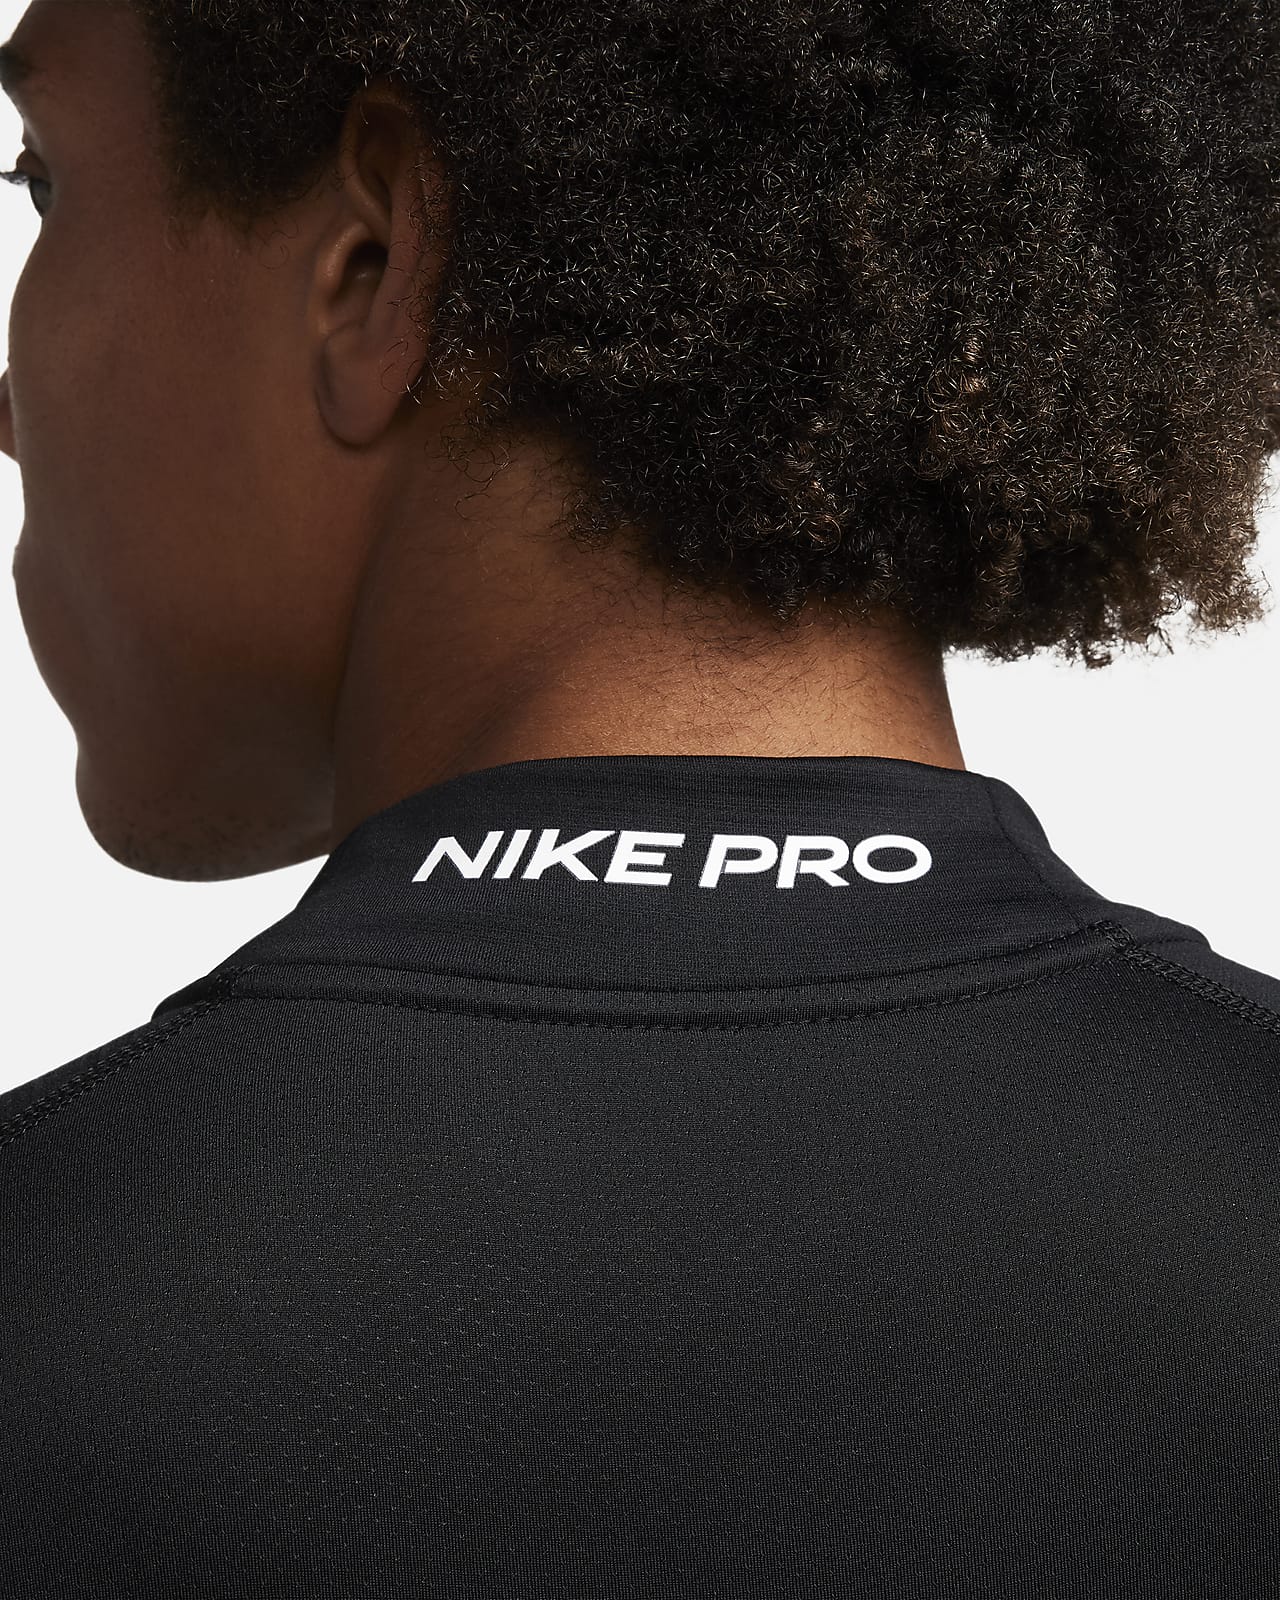 Nike Dri-FIT Academy Pro Long Sleeve Drill Top - Black